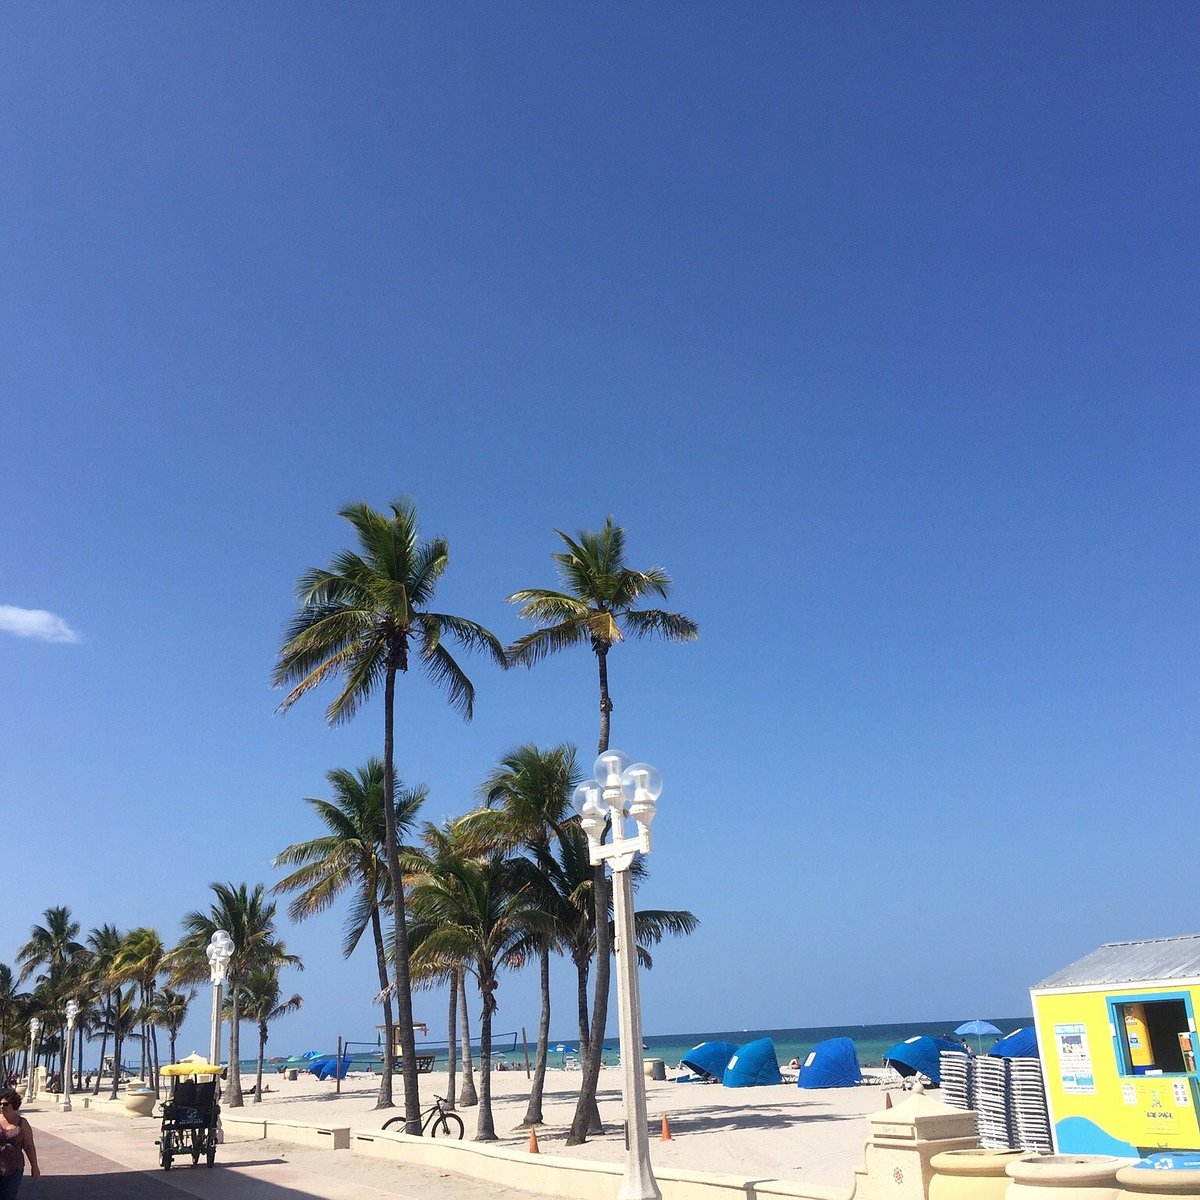 12th Street Beach - Miami Beach (FL), Estados Unidos - Picture of 12th  Street Beach, Miami Beach - Tripadvisor